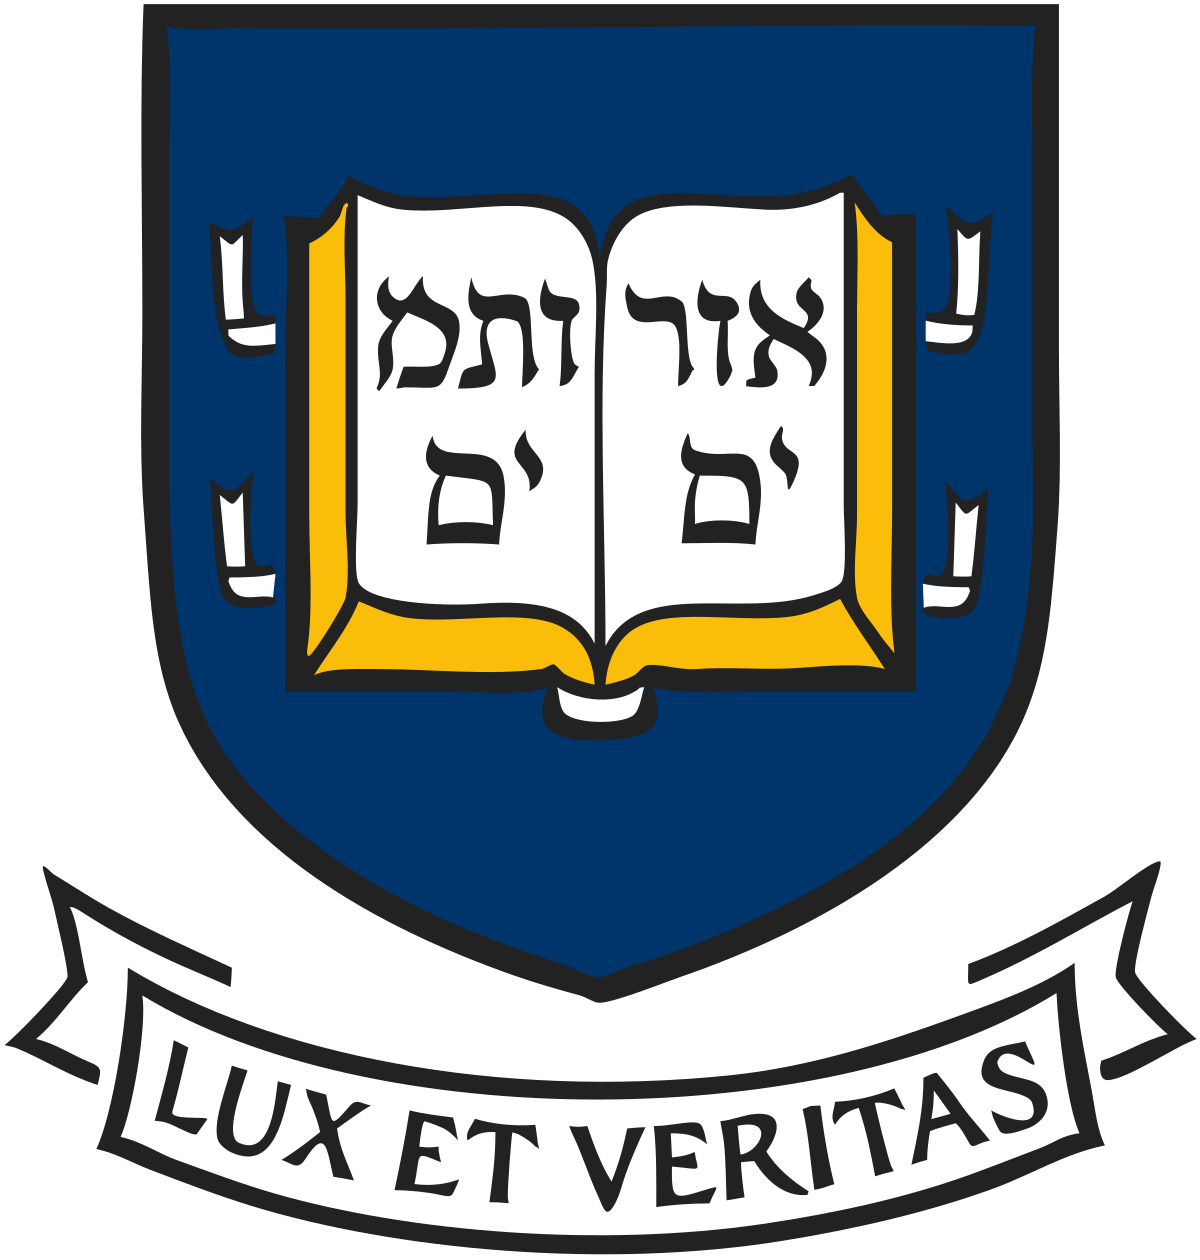 Most Popular University Logo - Yale University